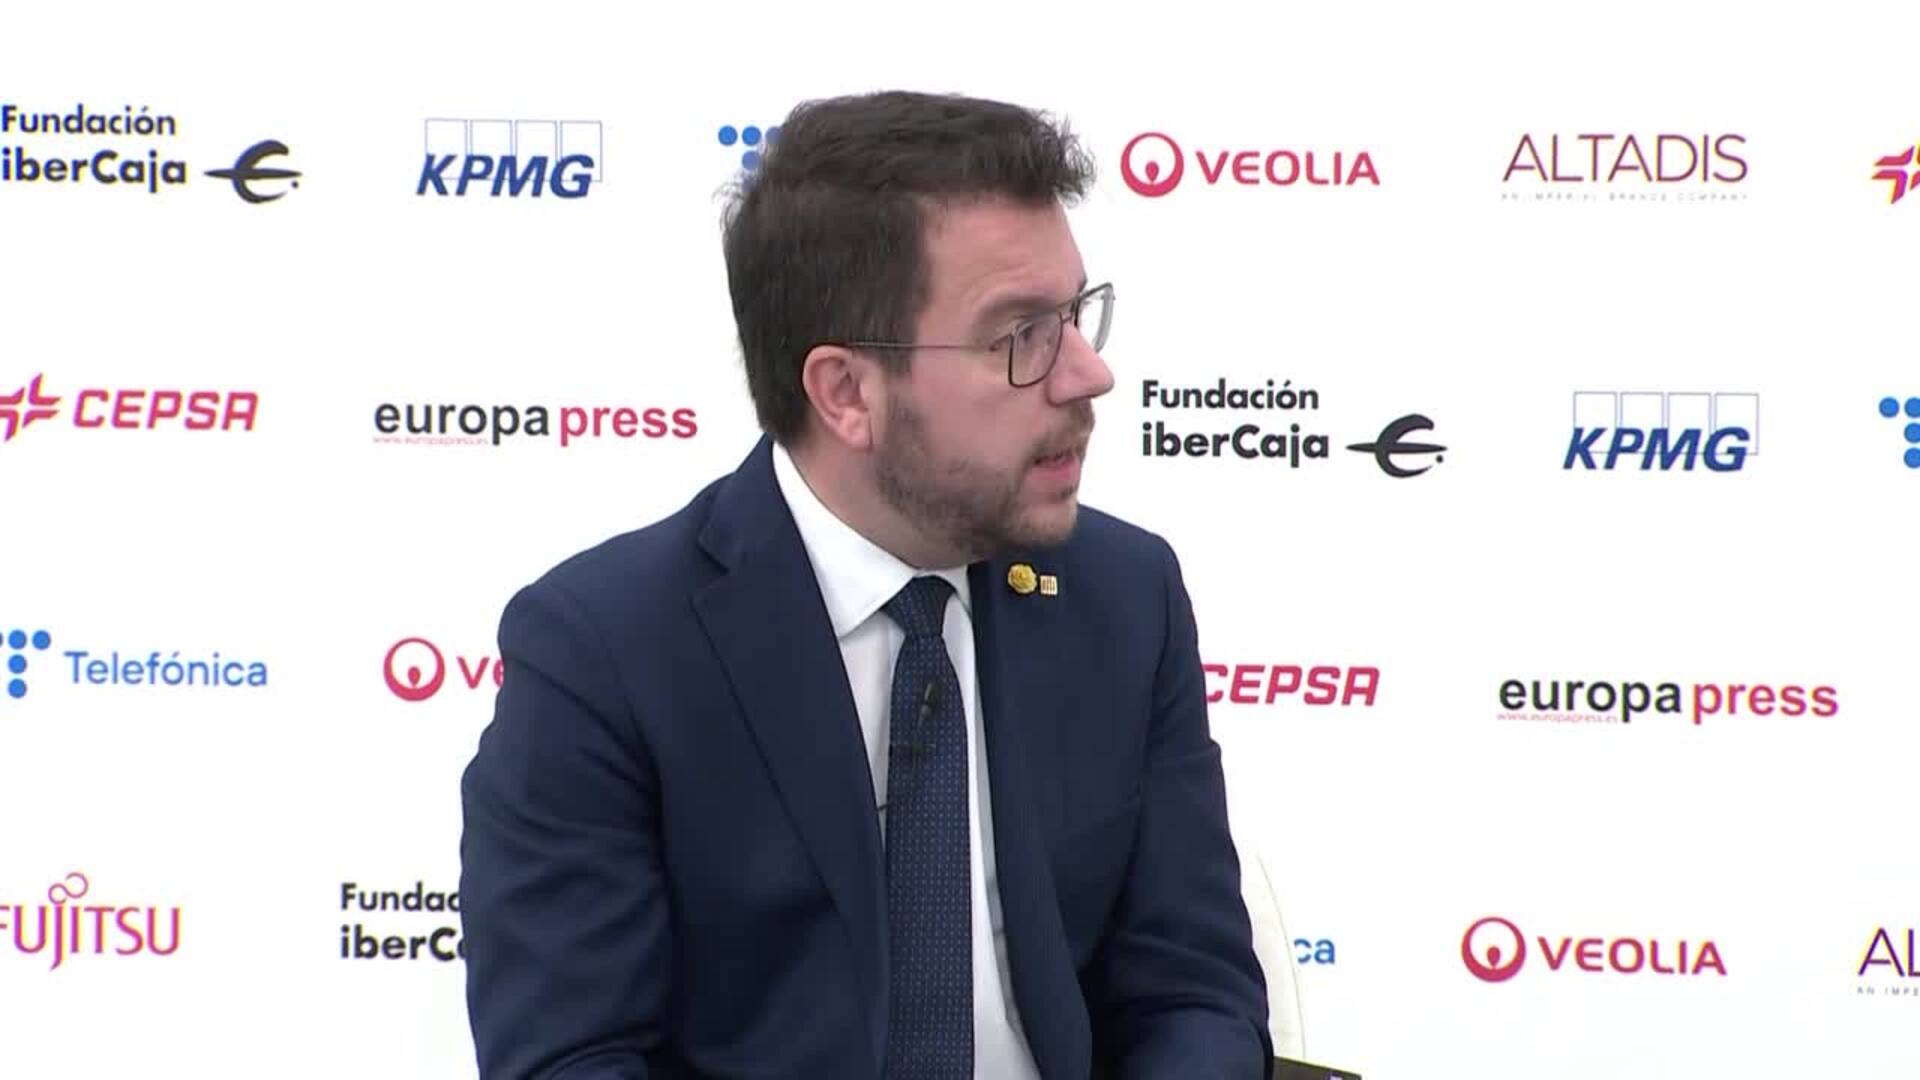 Aragonès sobre la posible candidatura de Puigdemont: "Todo el mundo es libre de presentarse"